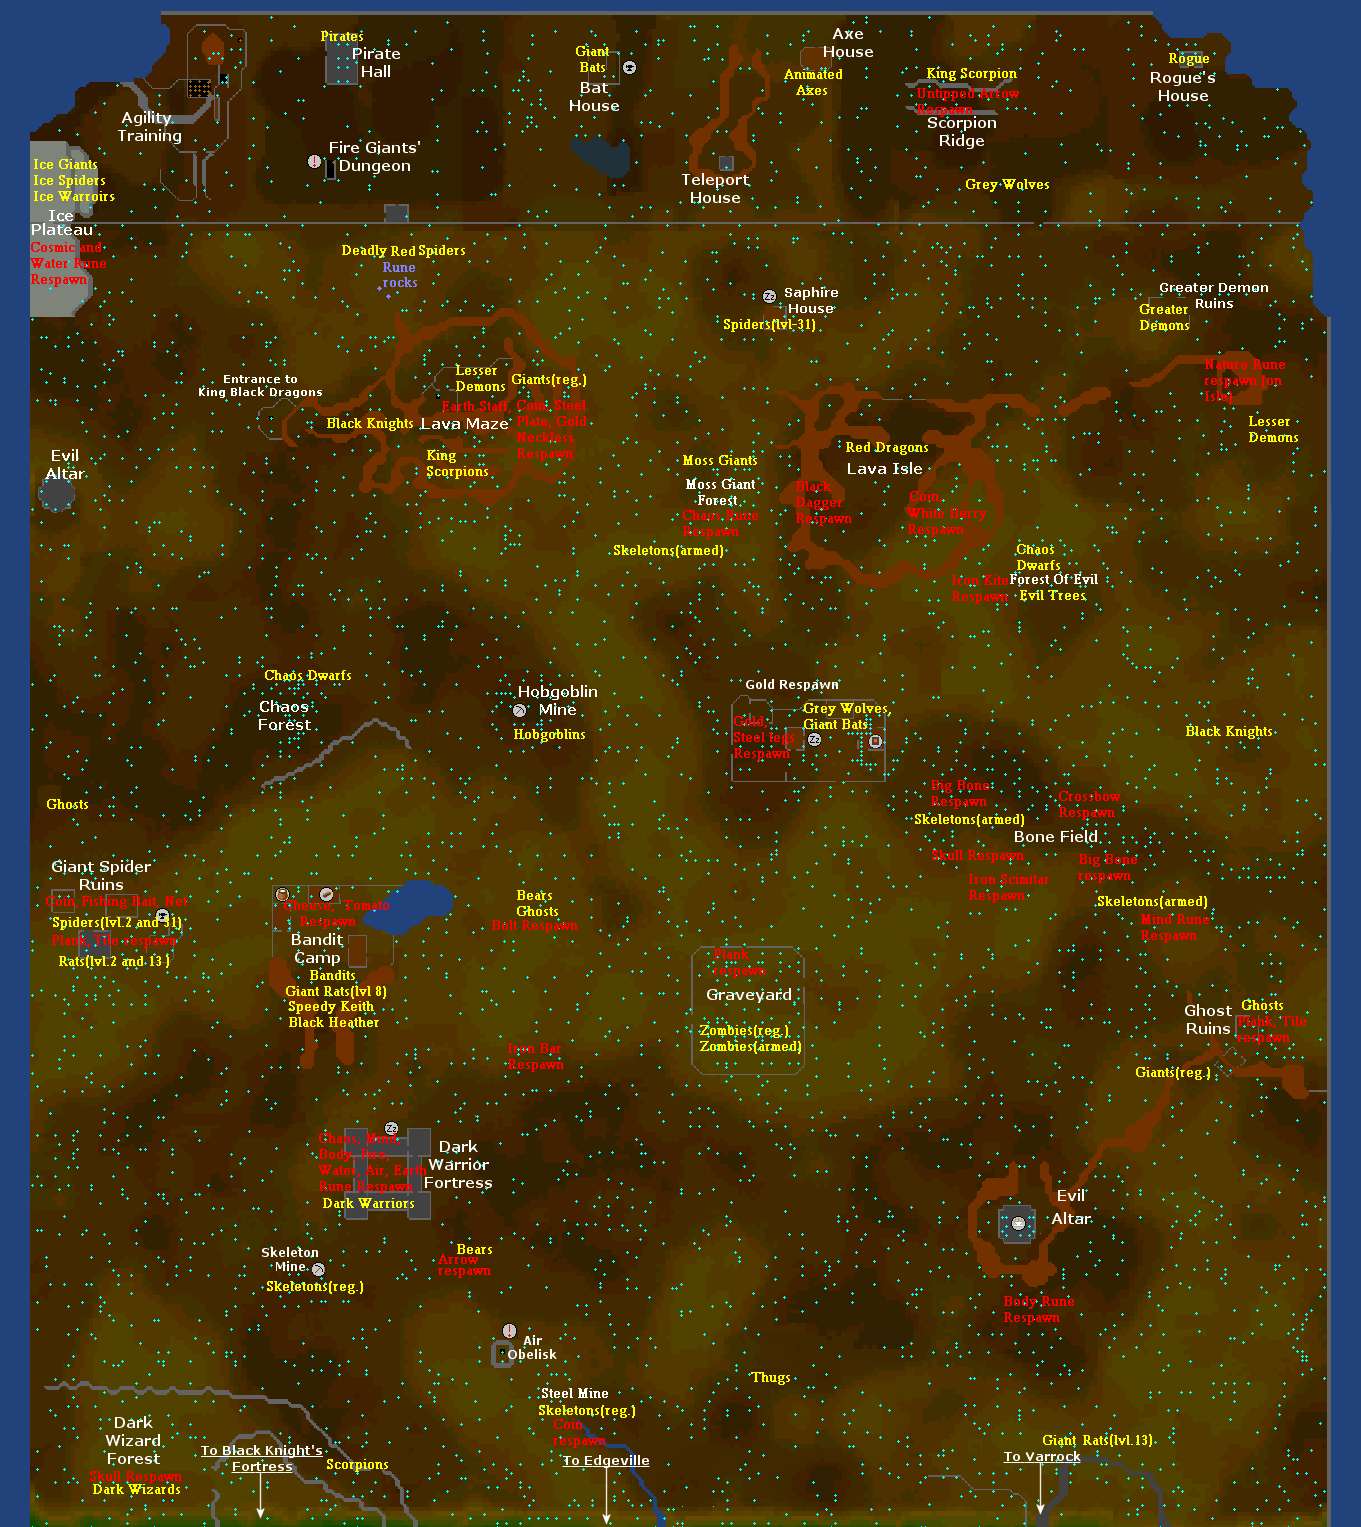 Wilderness Map